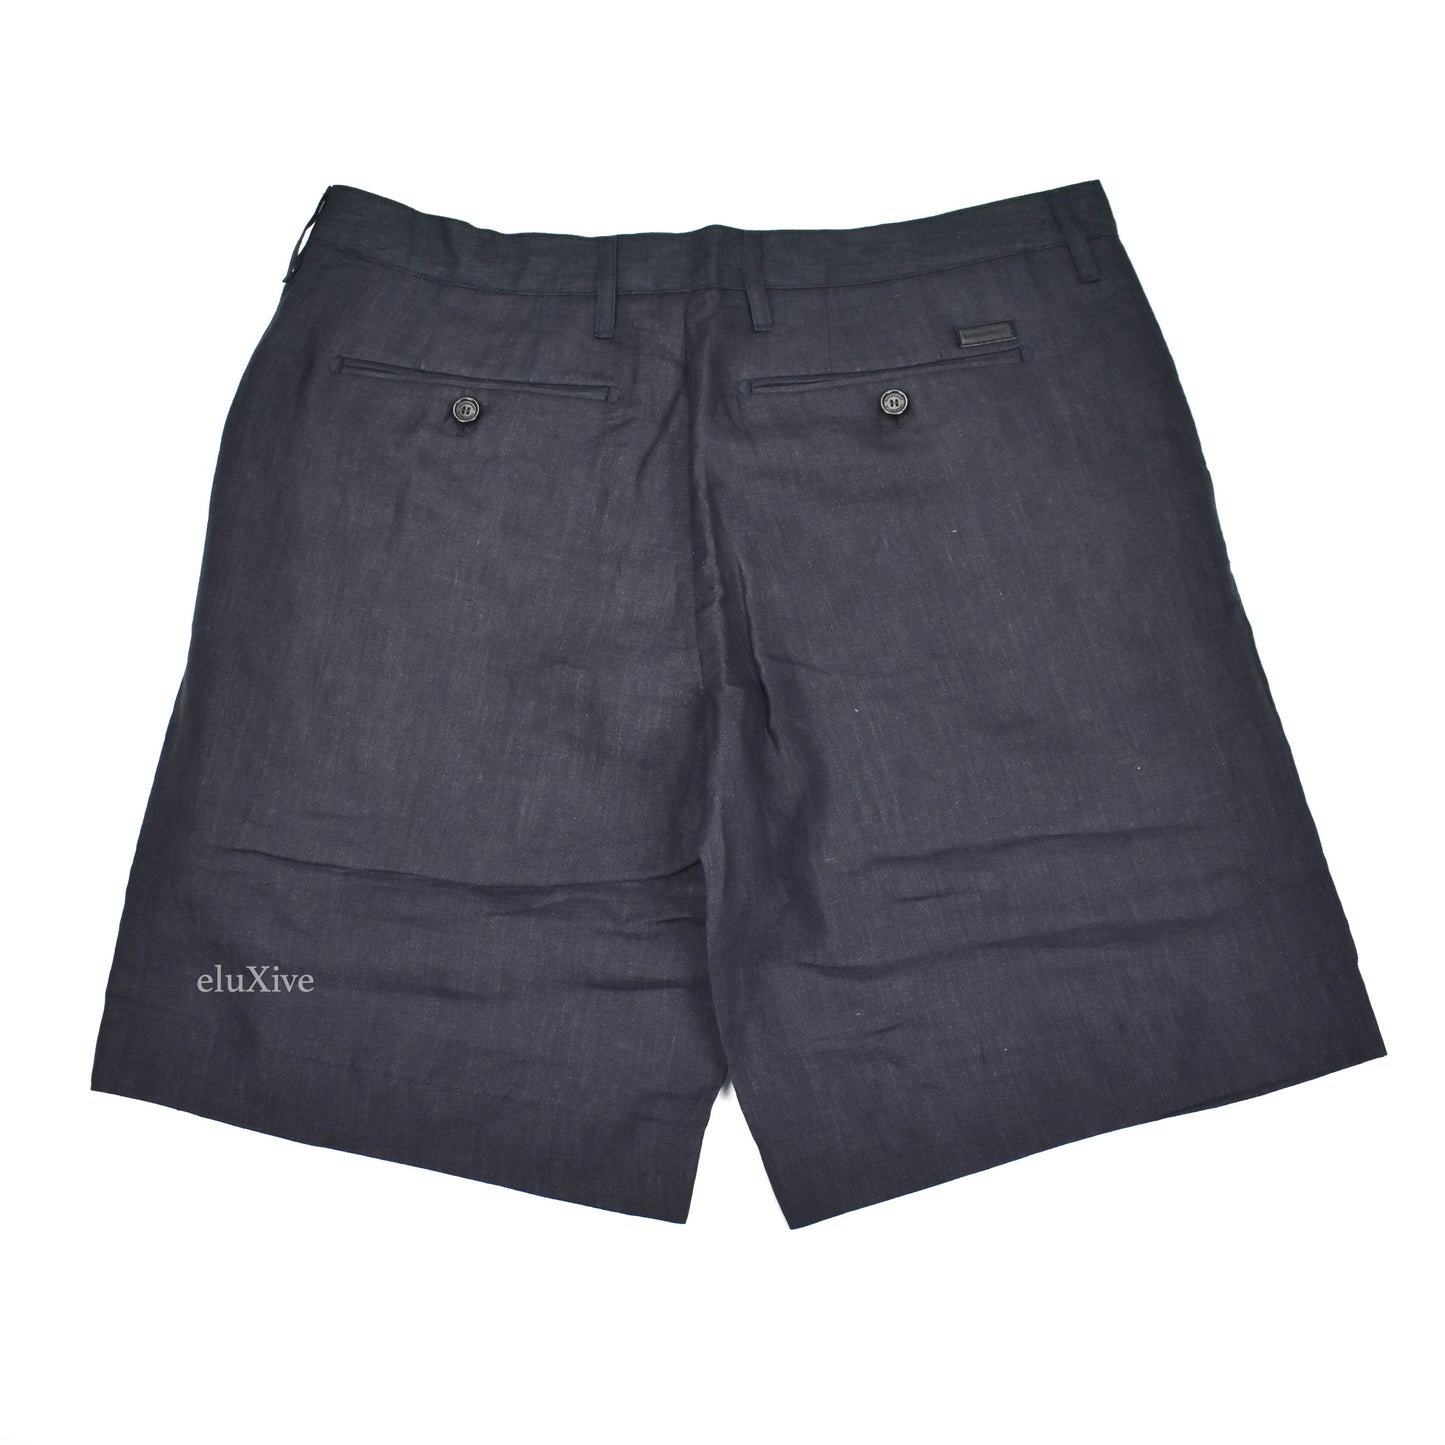 Burberry - Charcoal Gray 100% Linen Shorts